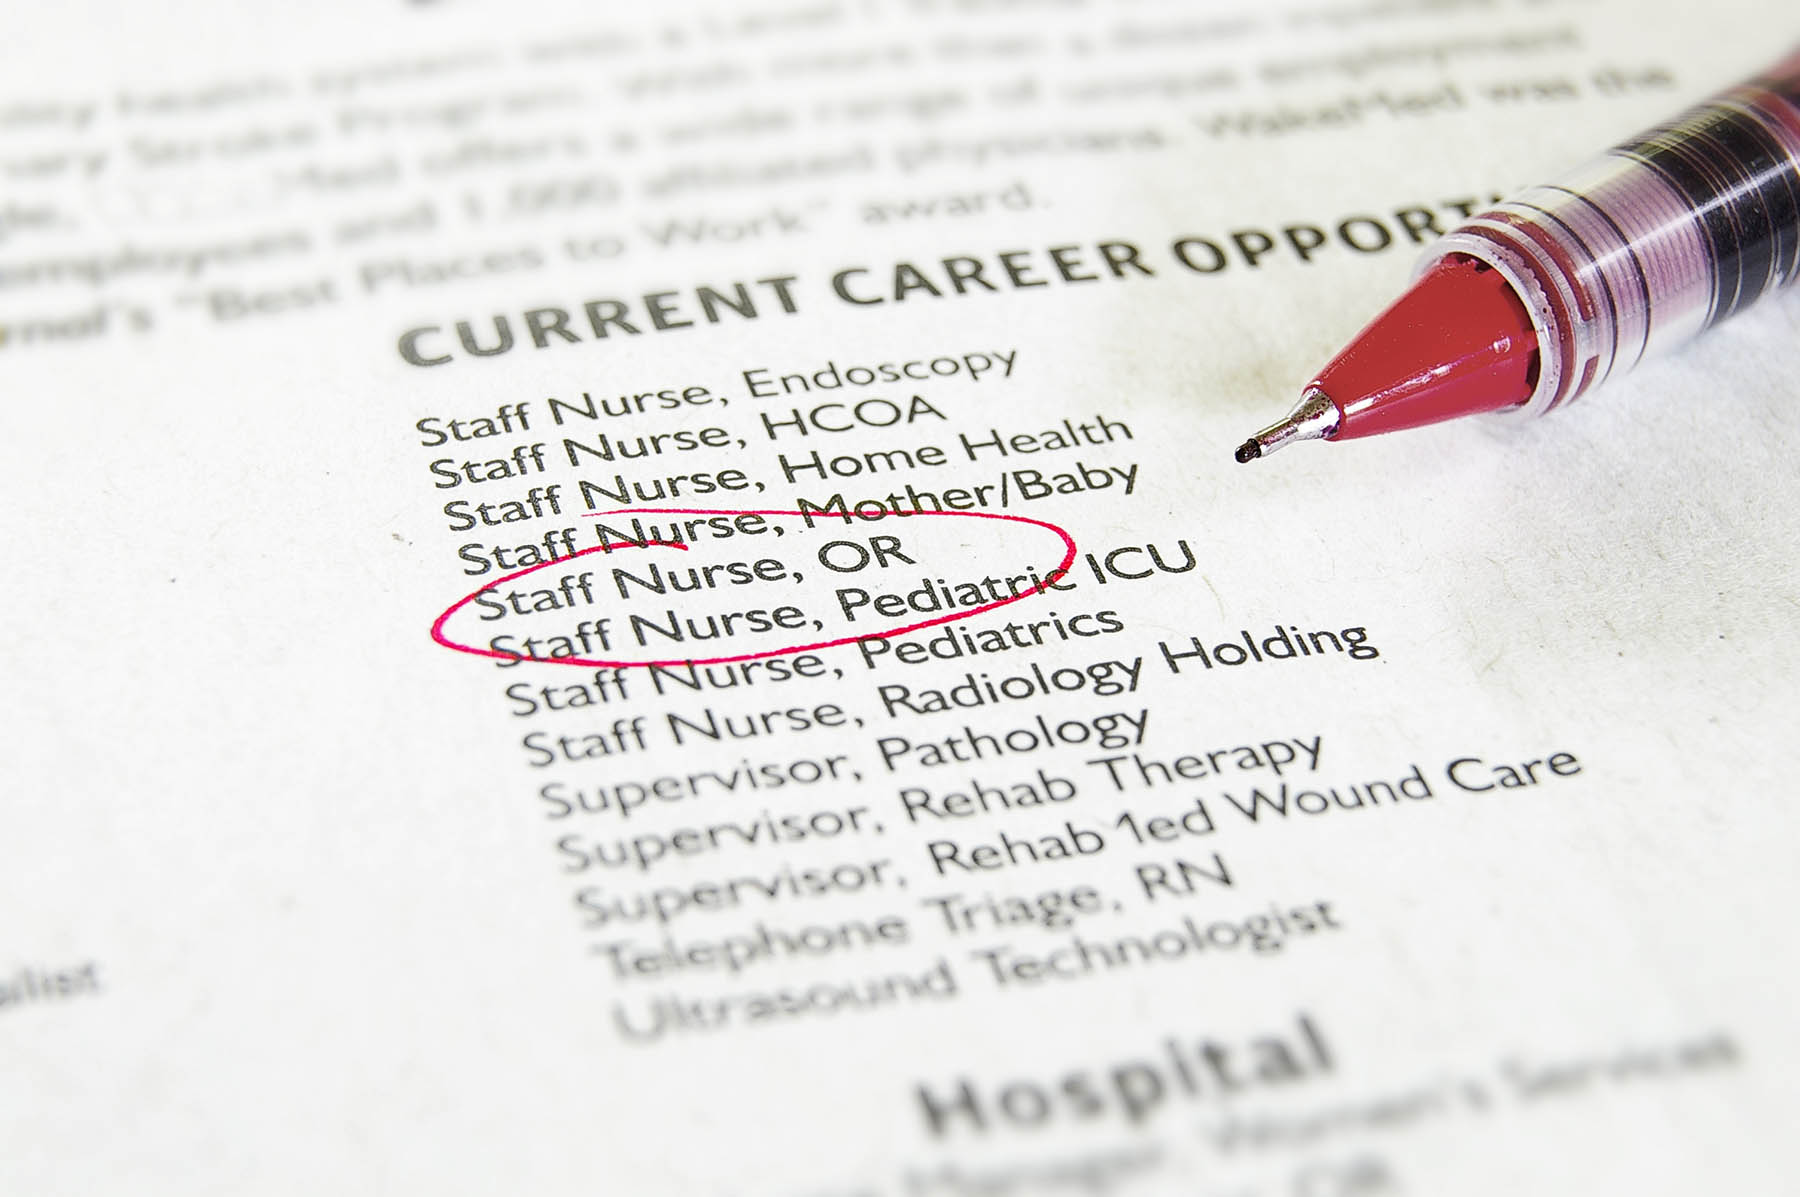 School Nurse Jobs Near Me: Exploring Opportunities in Healthcare